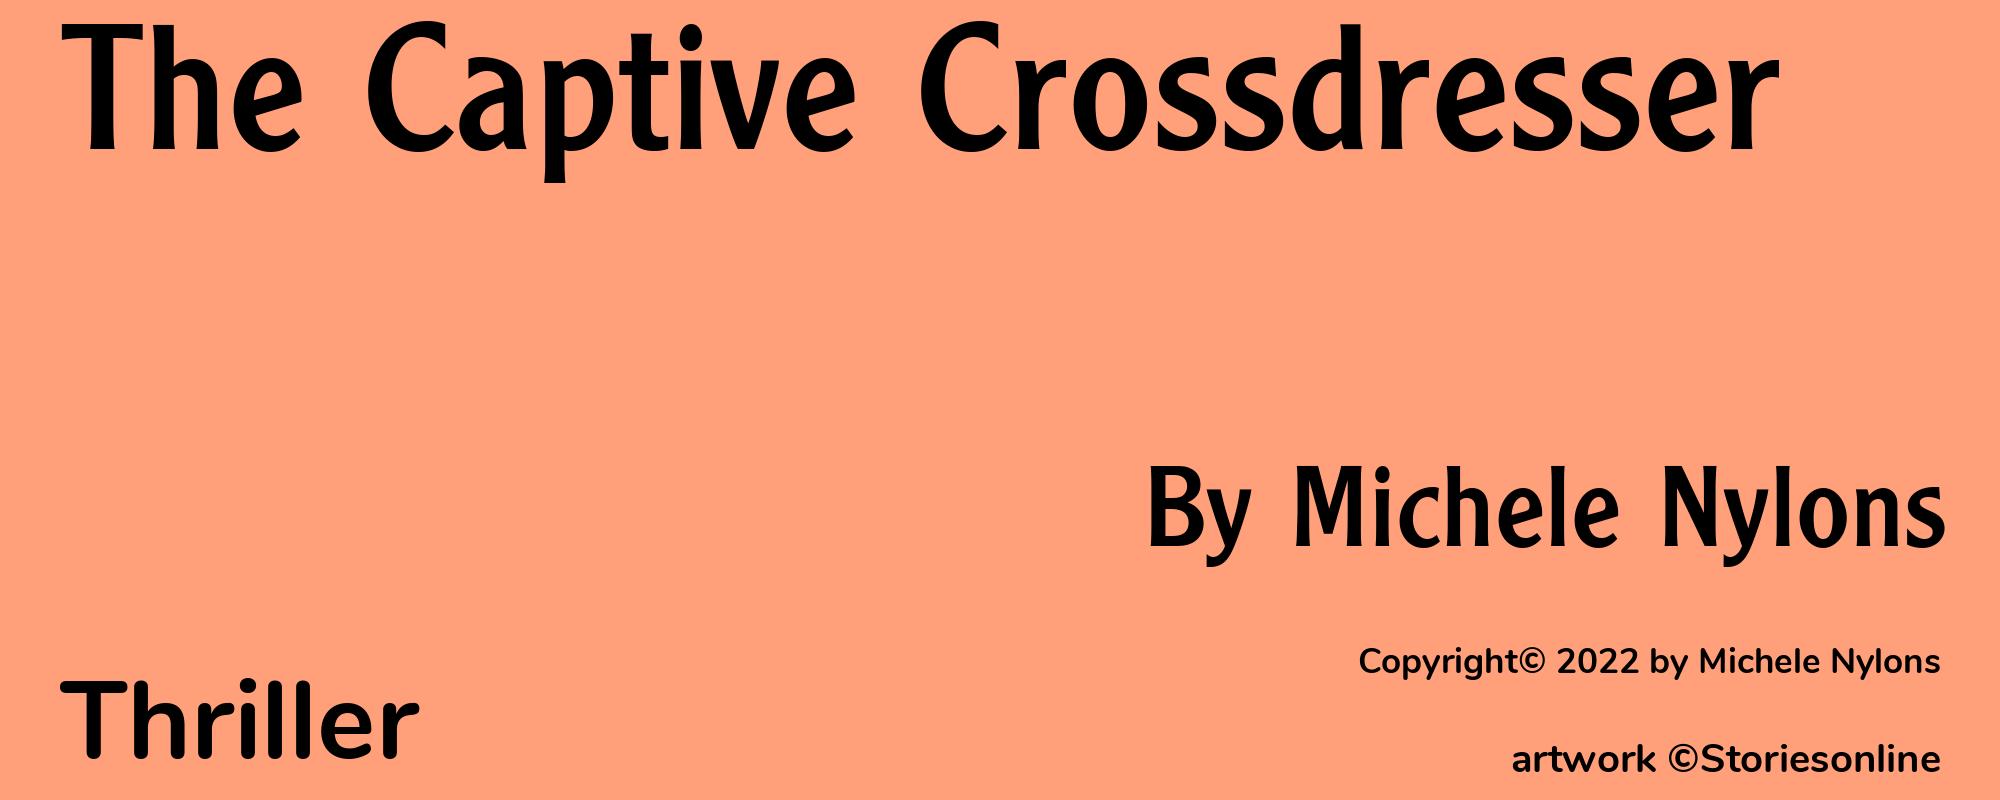 The Captive Crossdresser - Cover